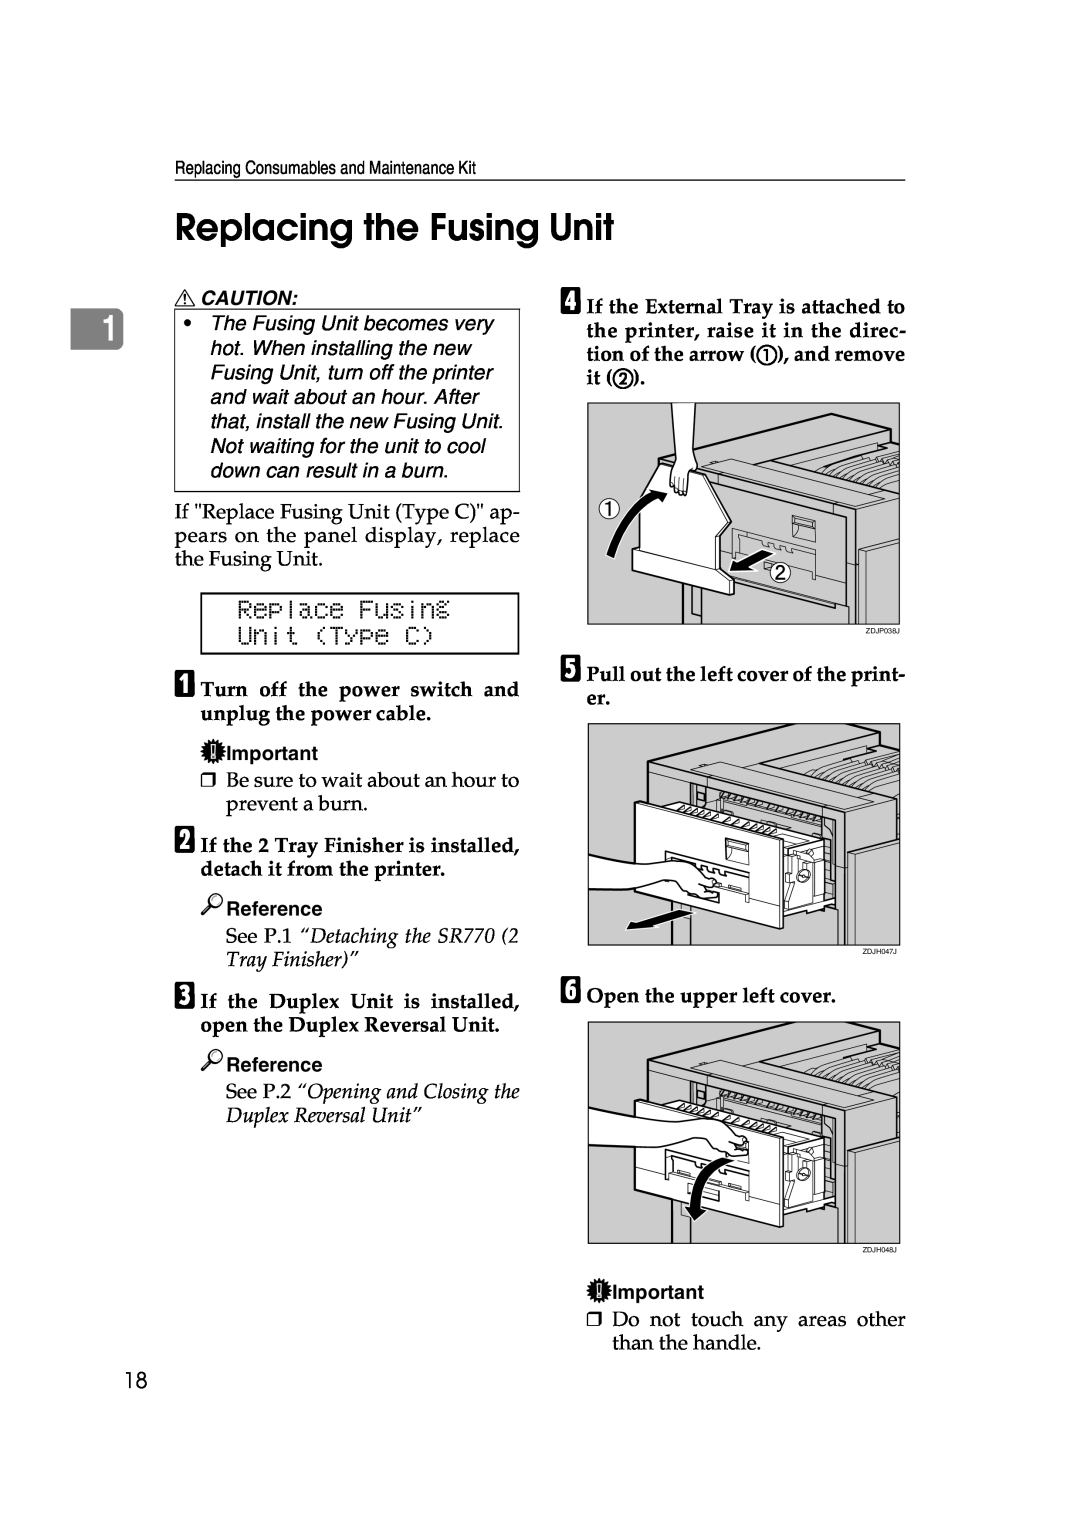 Savin SLP38C manual Replacing the Fusing Unit, Replace Fusing Unit Type C, Reference 